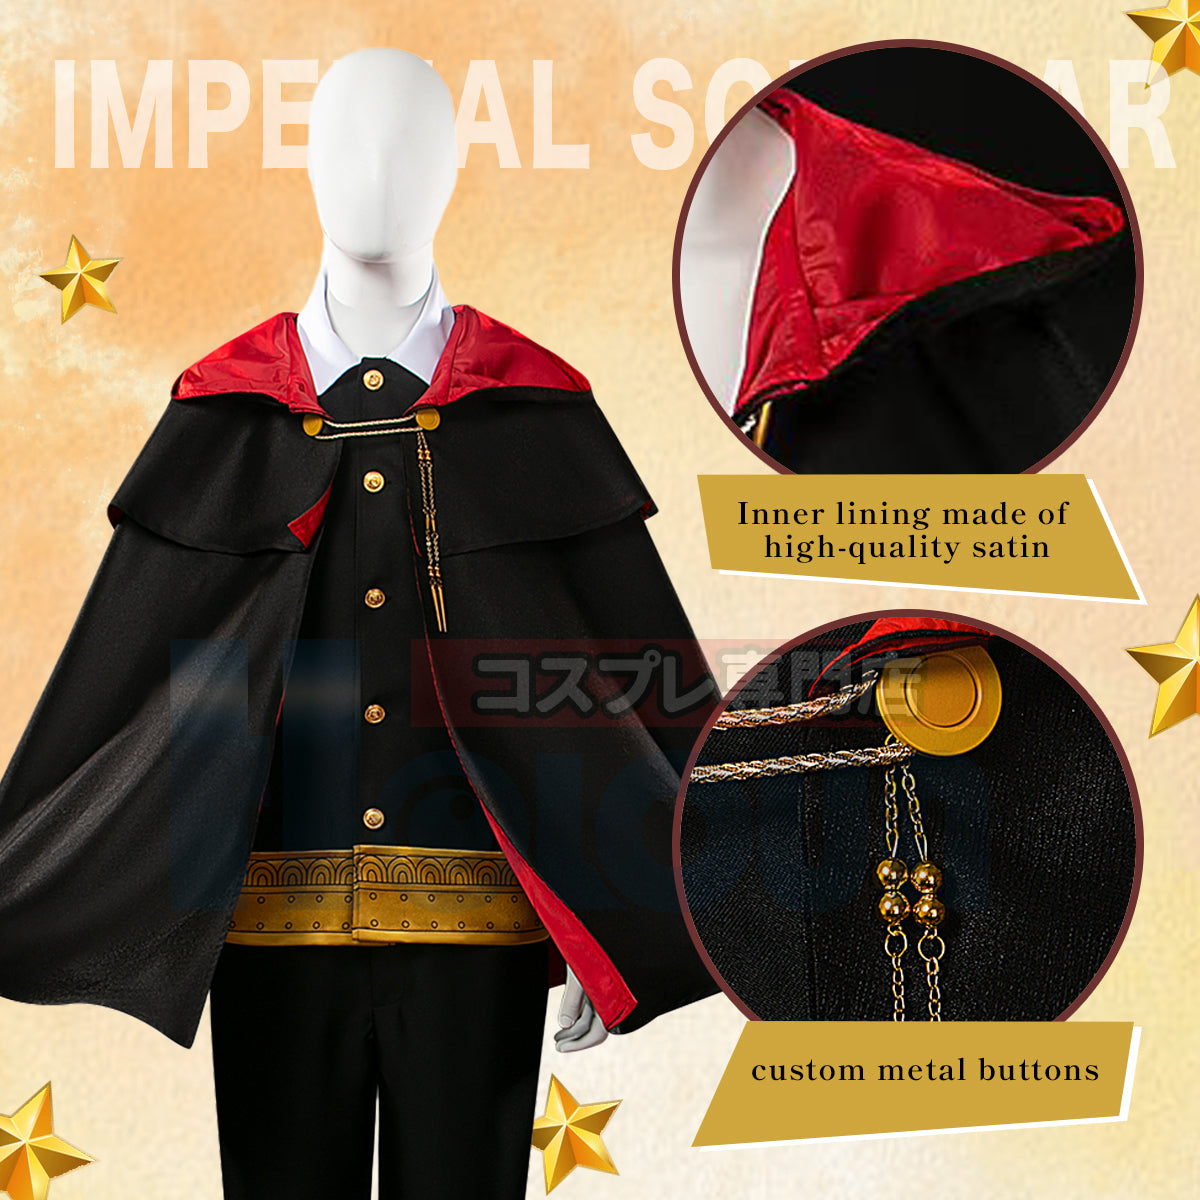 HOLOUN Spy Family Anime Cosplay Costume Anya Forger Damian Desmond Imperial Scholar Cloak School Uniform Cape Black Halloween Christmas